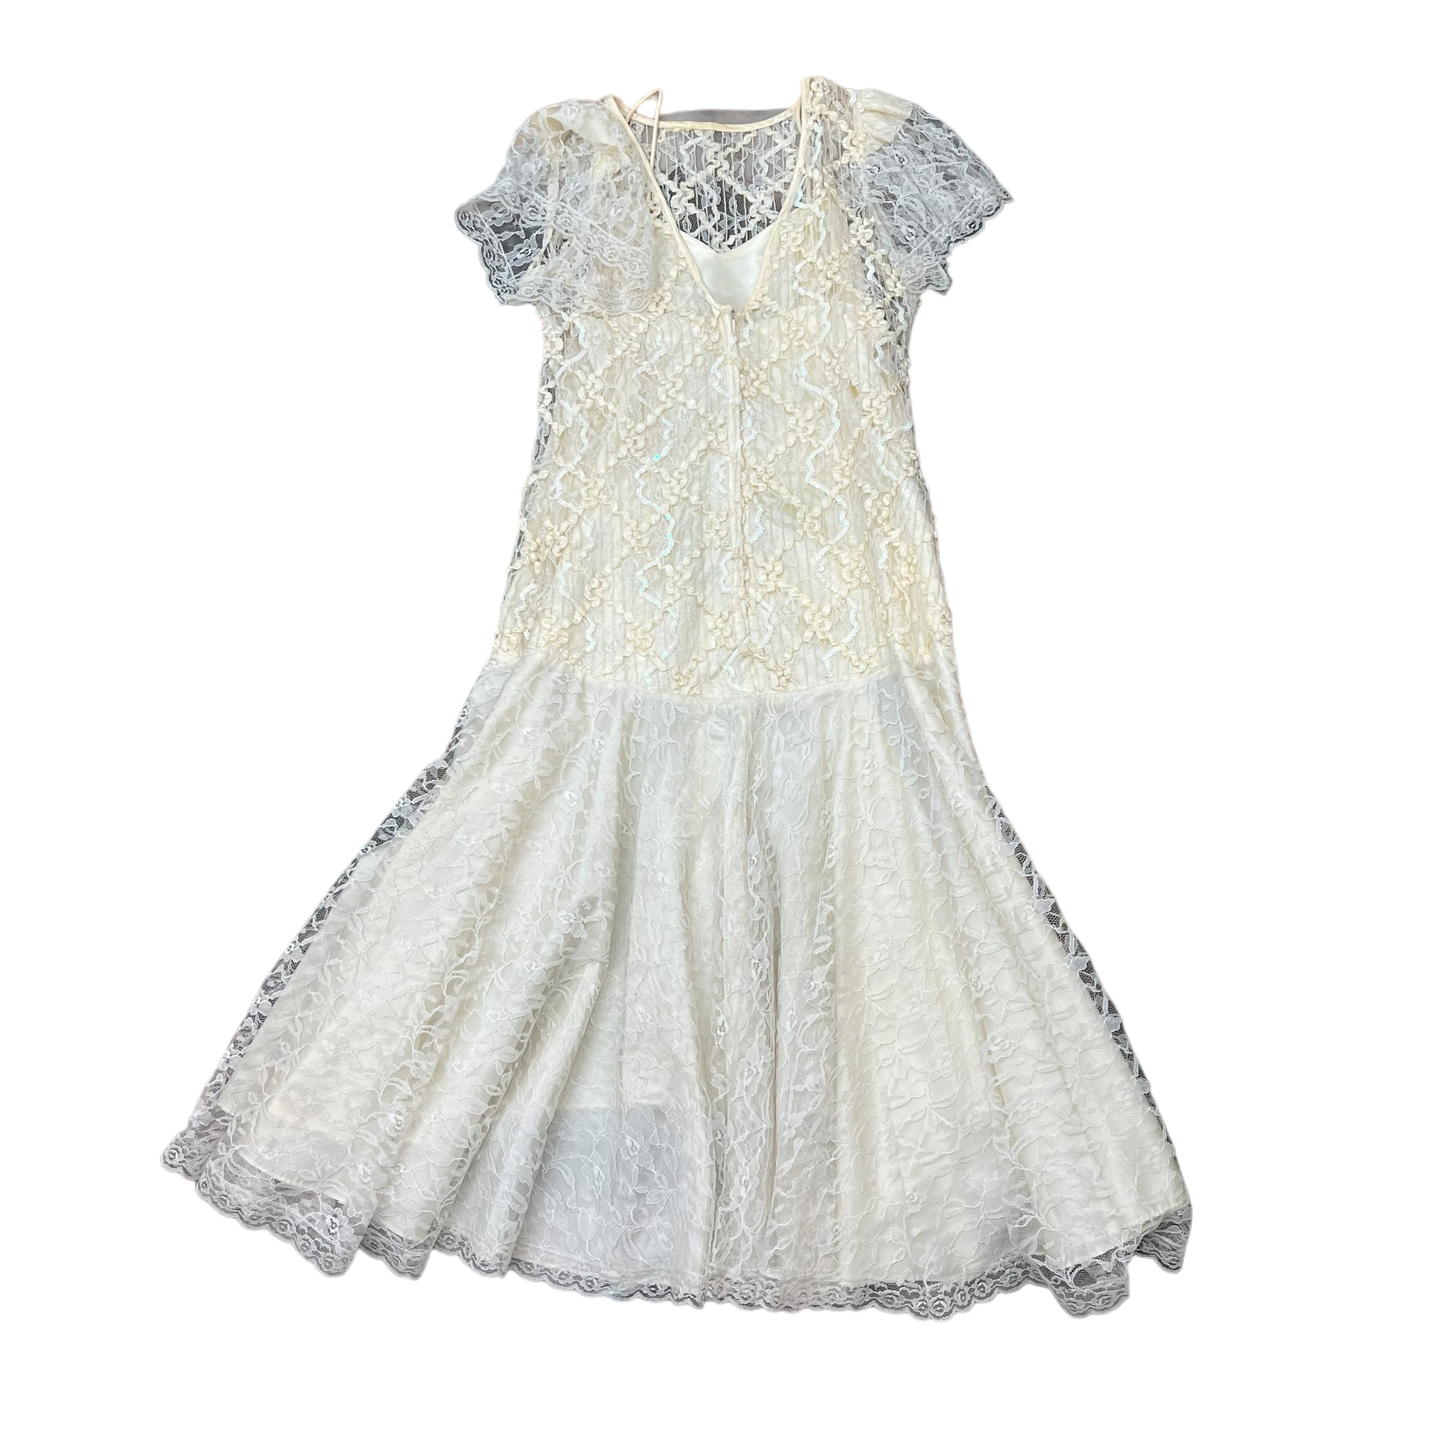 LONG WHITE VINTAGE LACEY DRESS